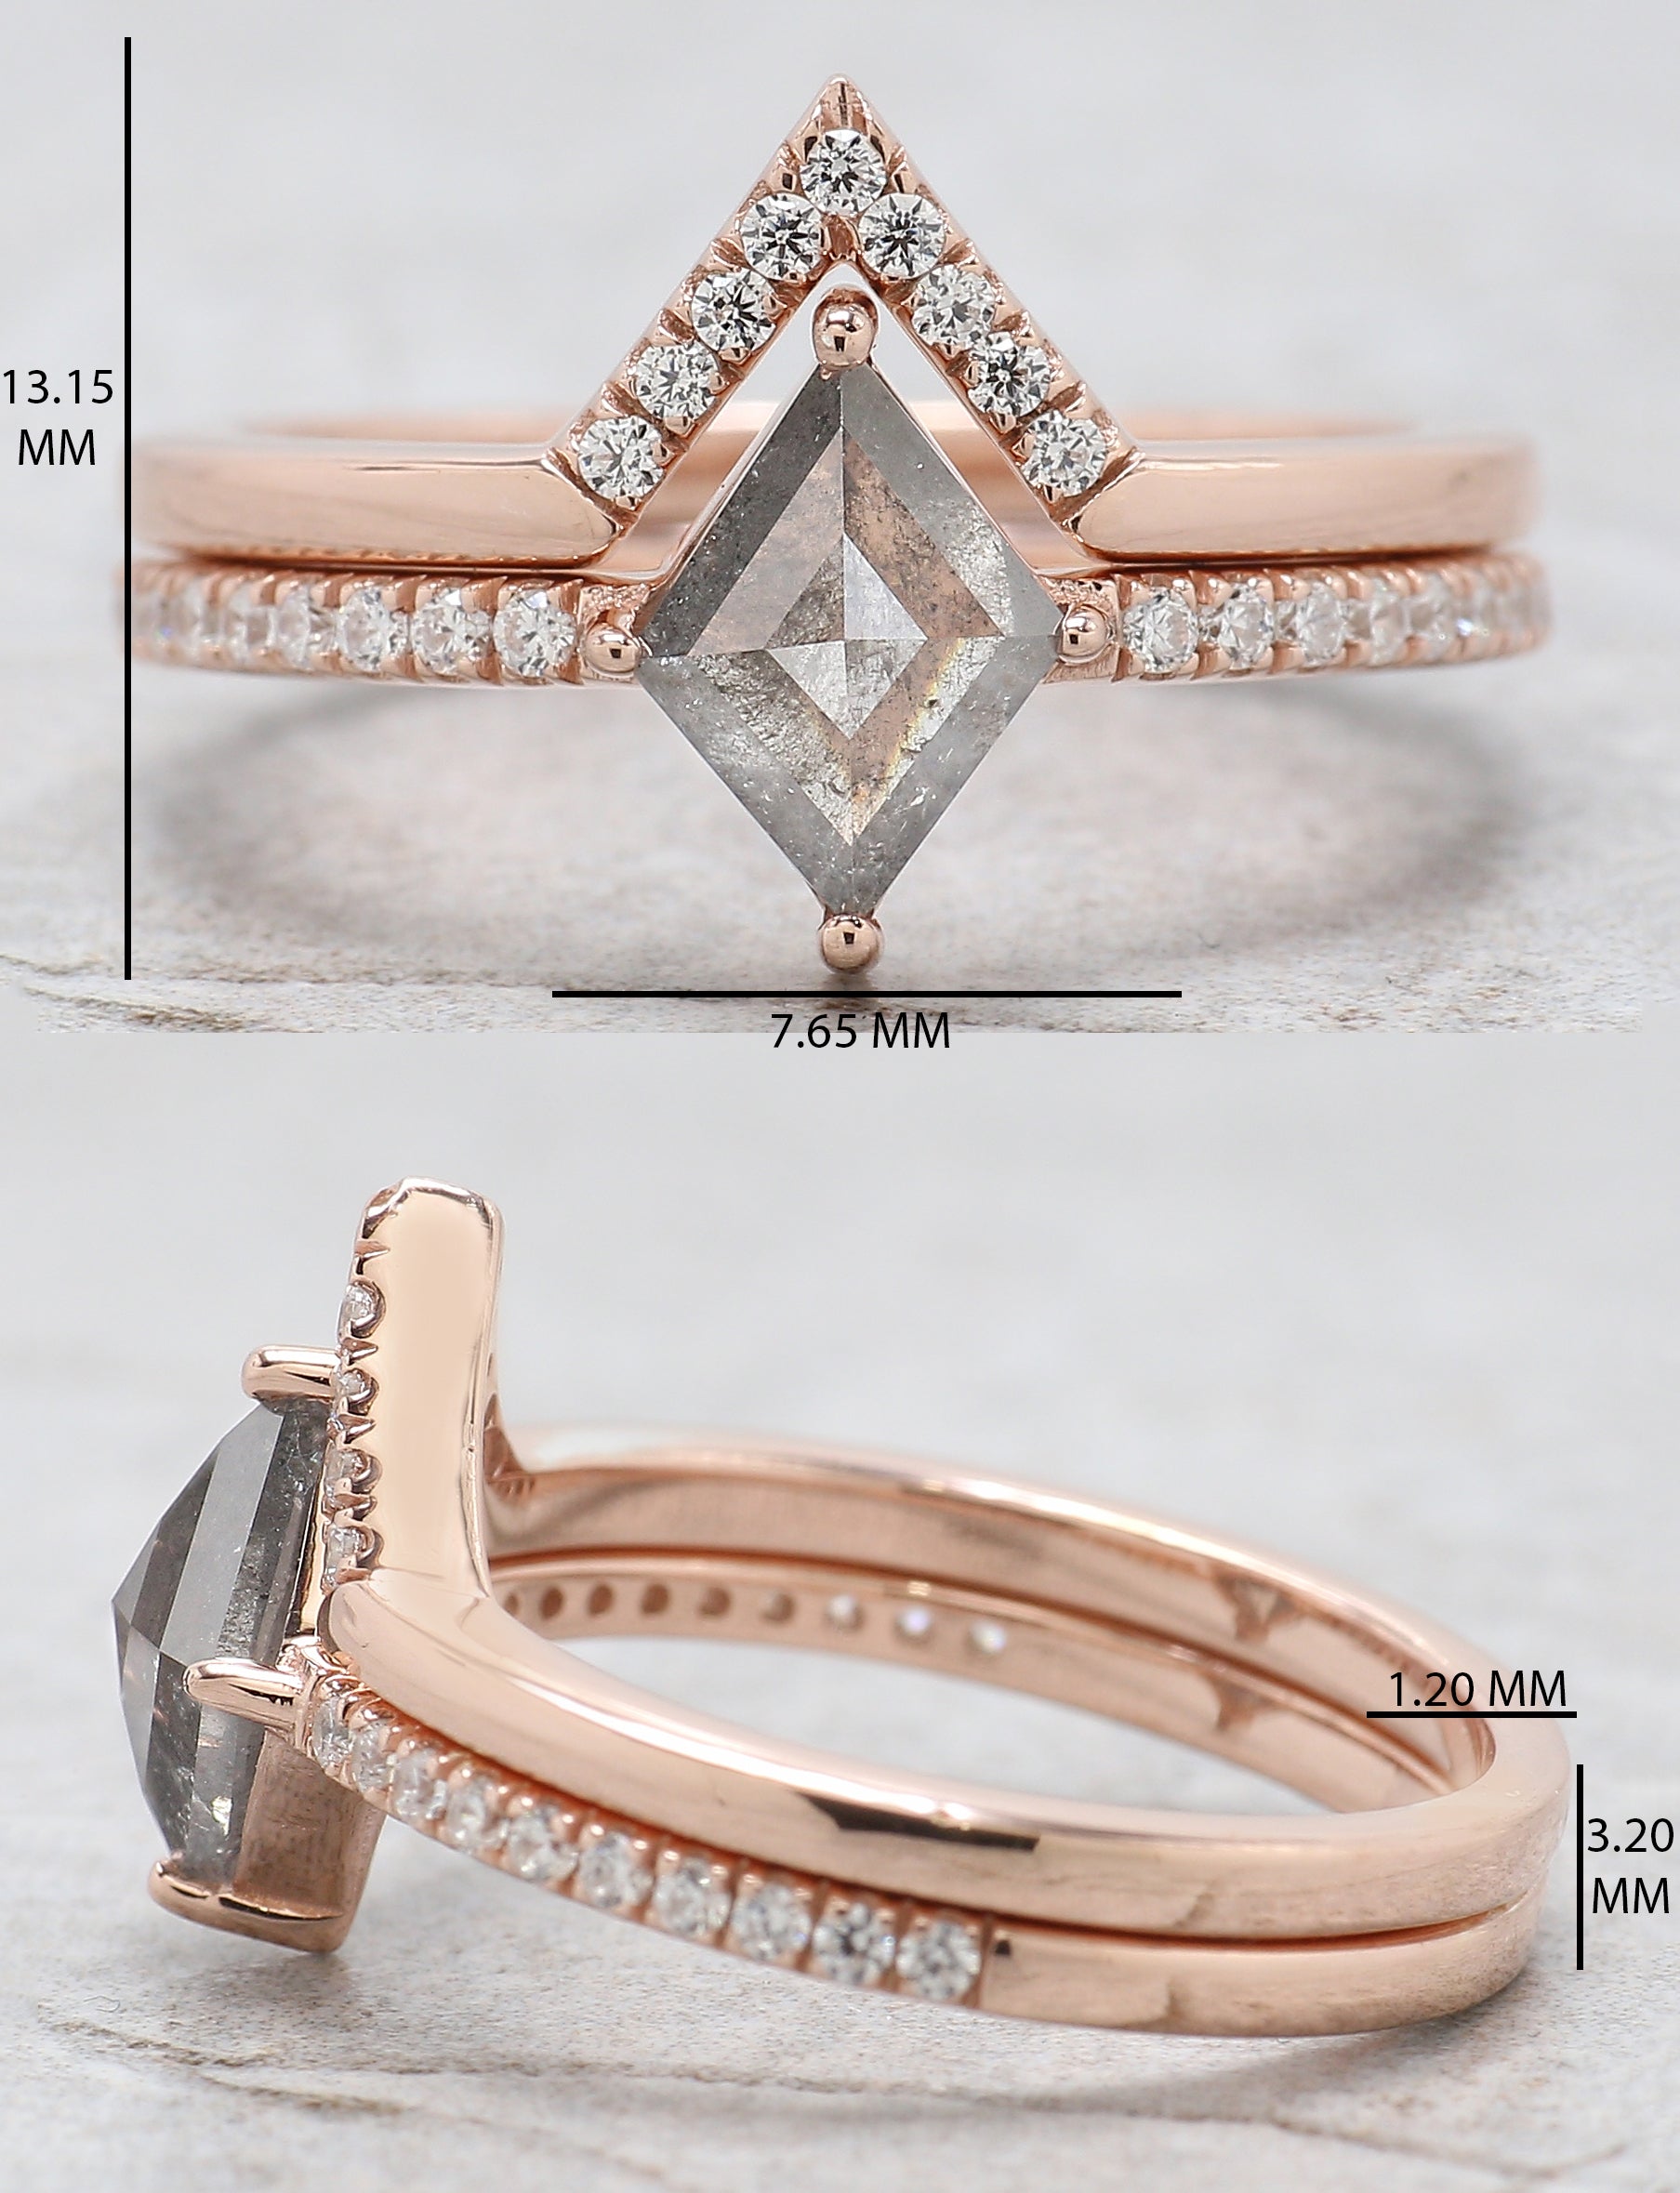 Kite Cut Salt And Pepper Diamond Ring 0.97 Ct 8.45 MM Kite Diamond Ring 14K Solid Rose Gold Silver Kite Engagement Ring Gift For Her QL3065